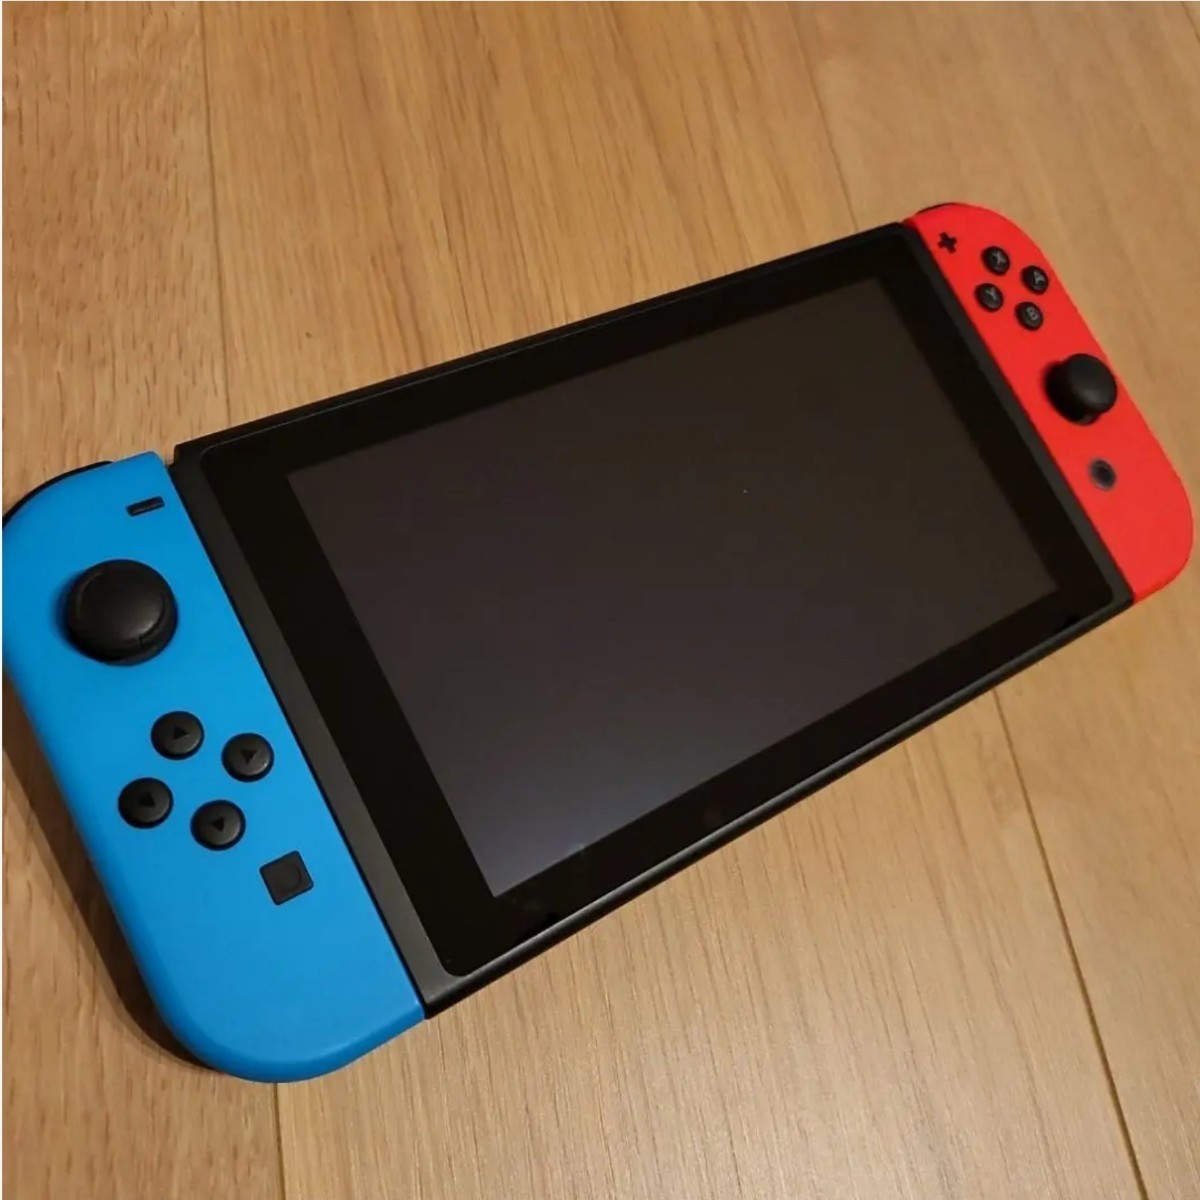 Nintendo Switch「バッテリー持続時間が長くなった新モデル」 Nintendo Switch ニンテンドースイッチ